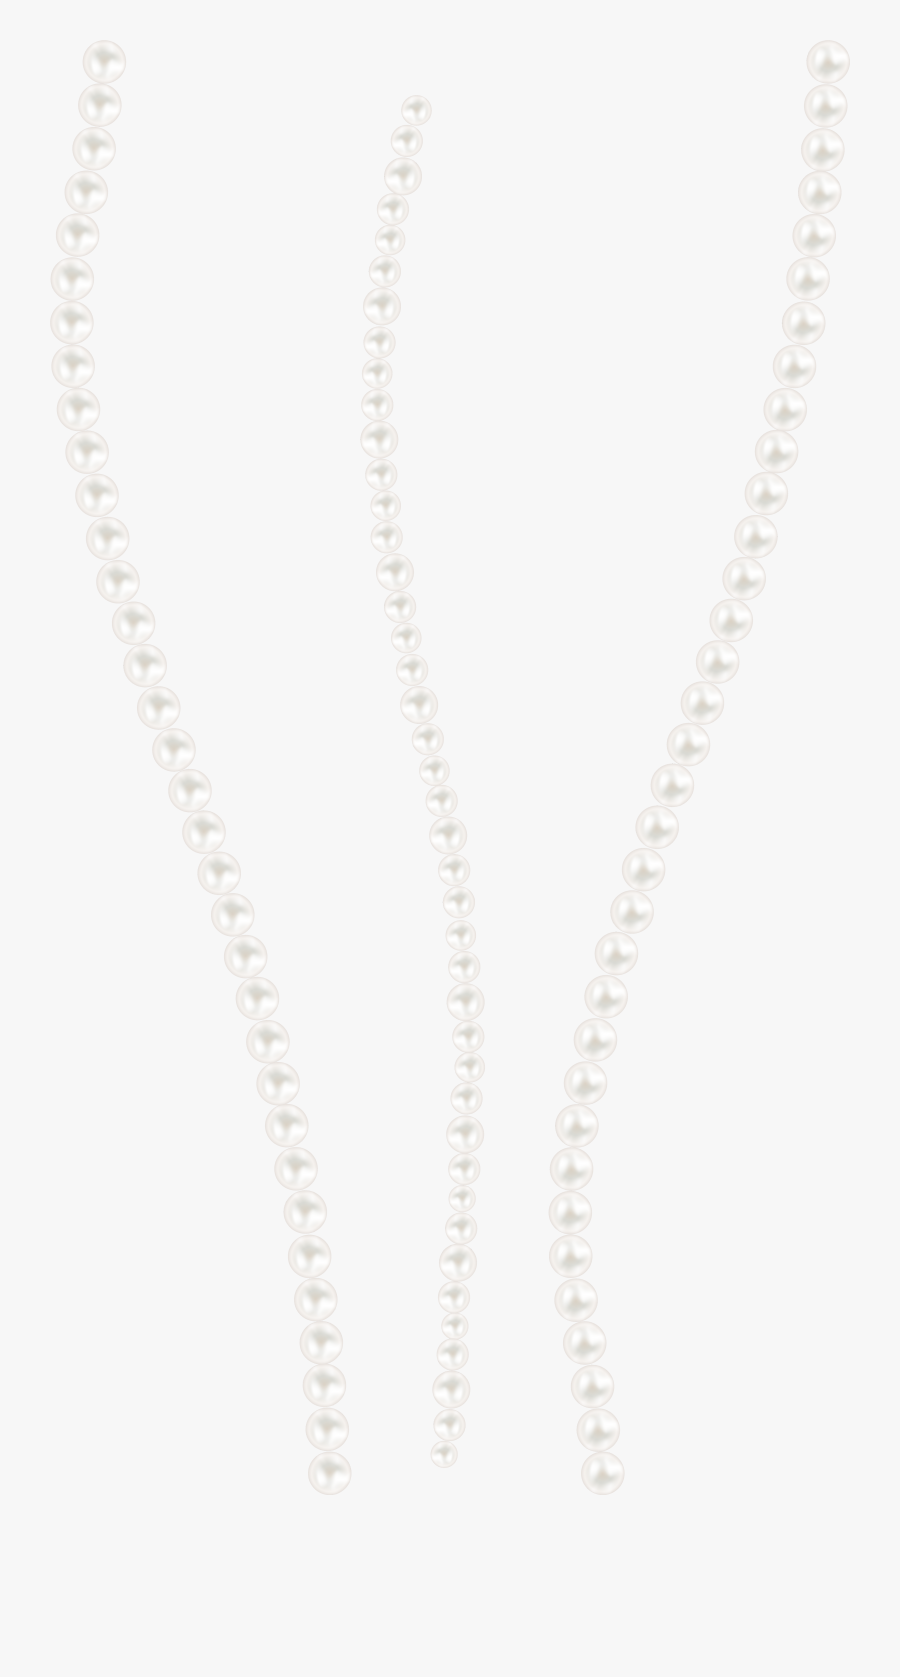 Clipart Black And White Stock Decor Clip Art Image - Classic Pearl Necklace Set, Transparent Clipart